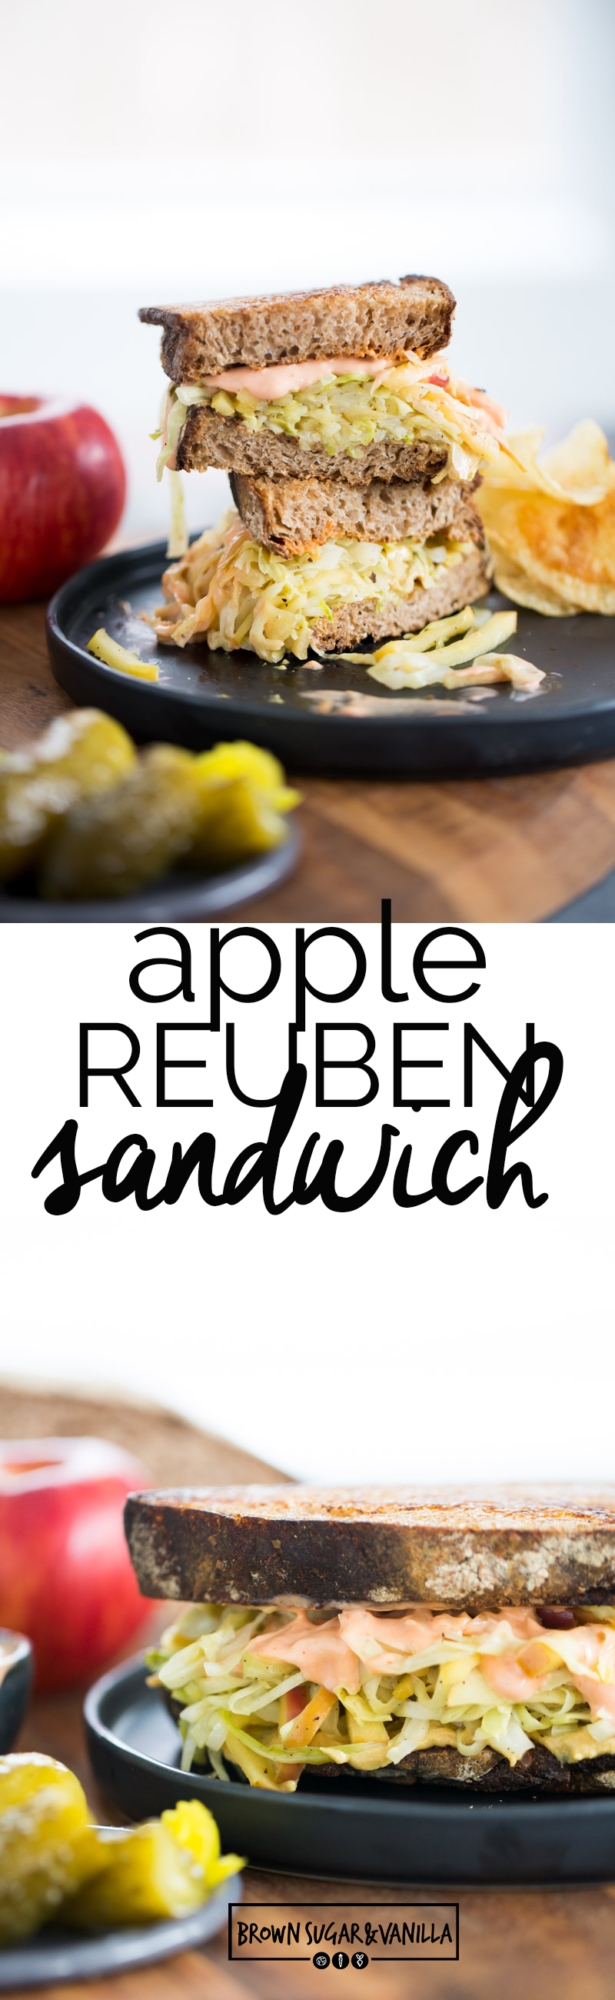 apple reuben sandwich